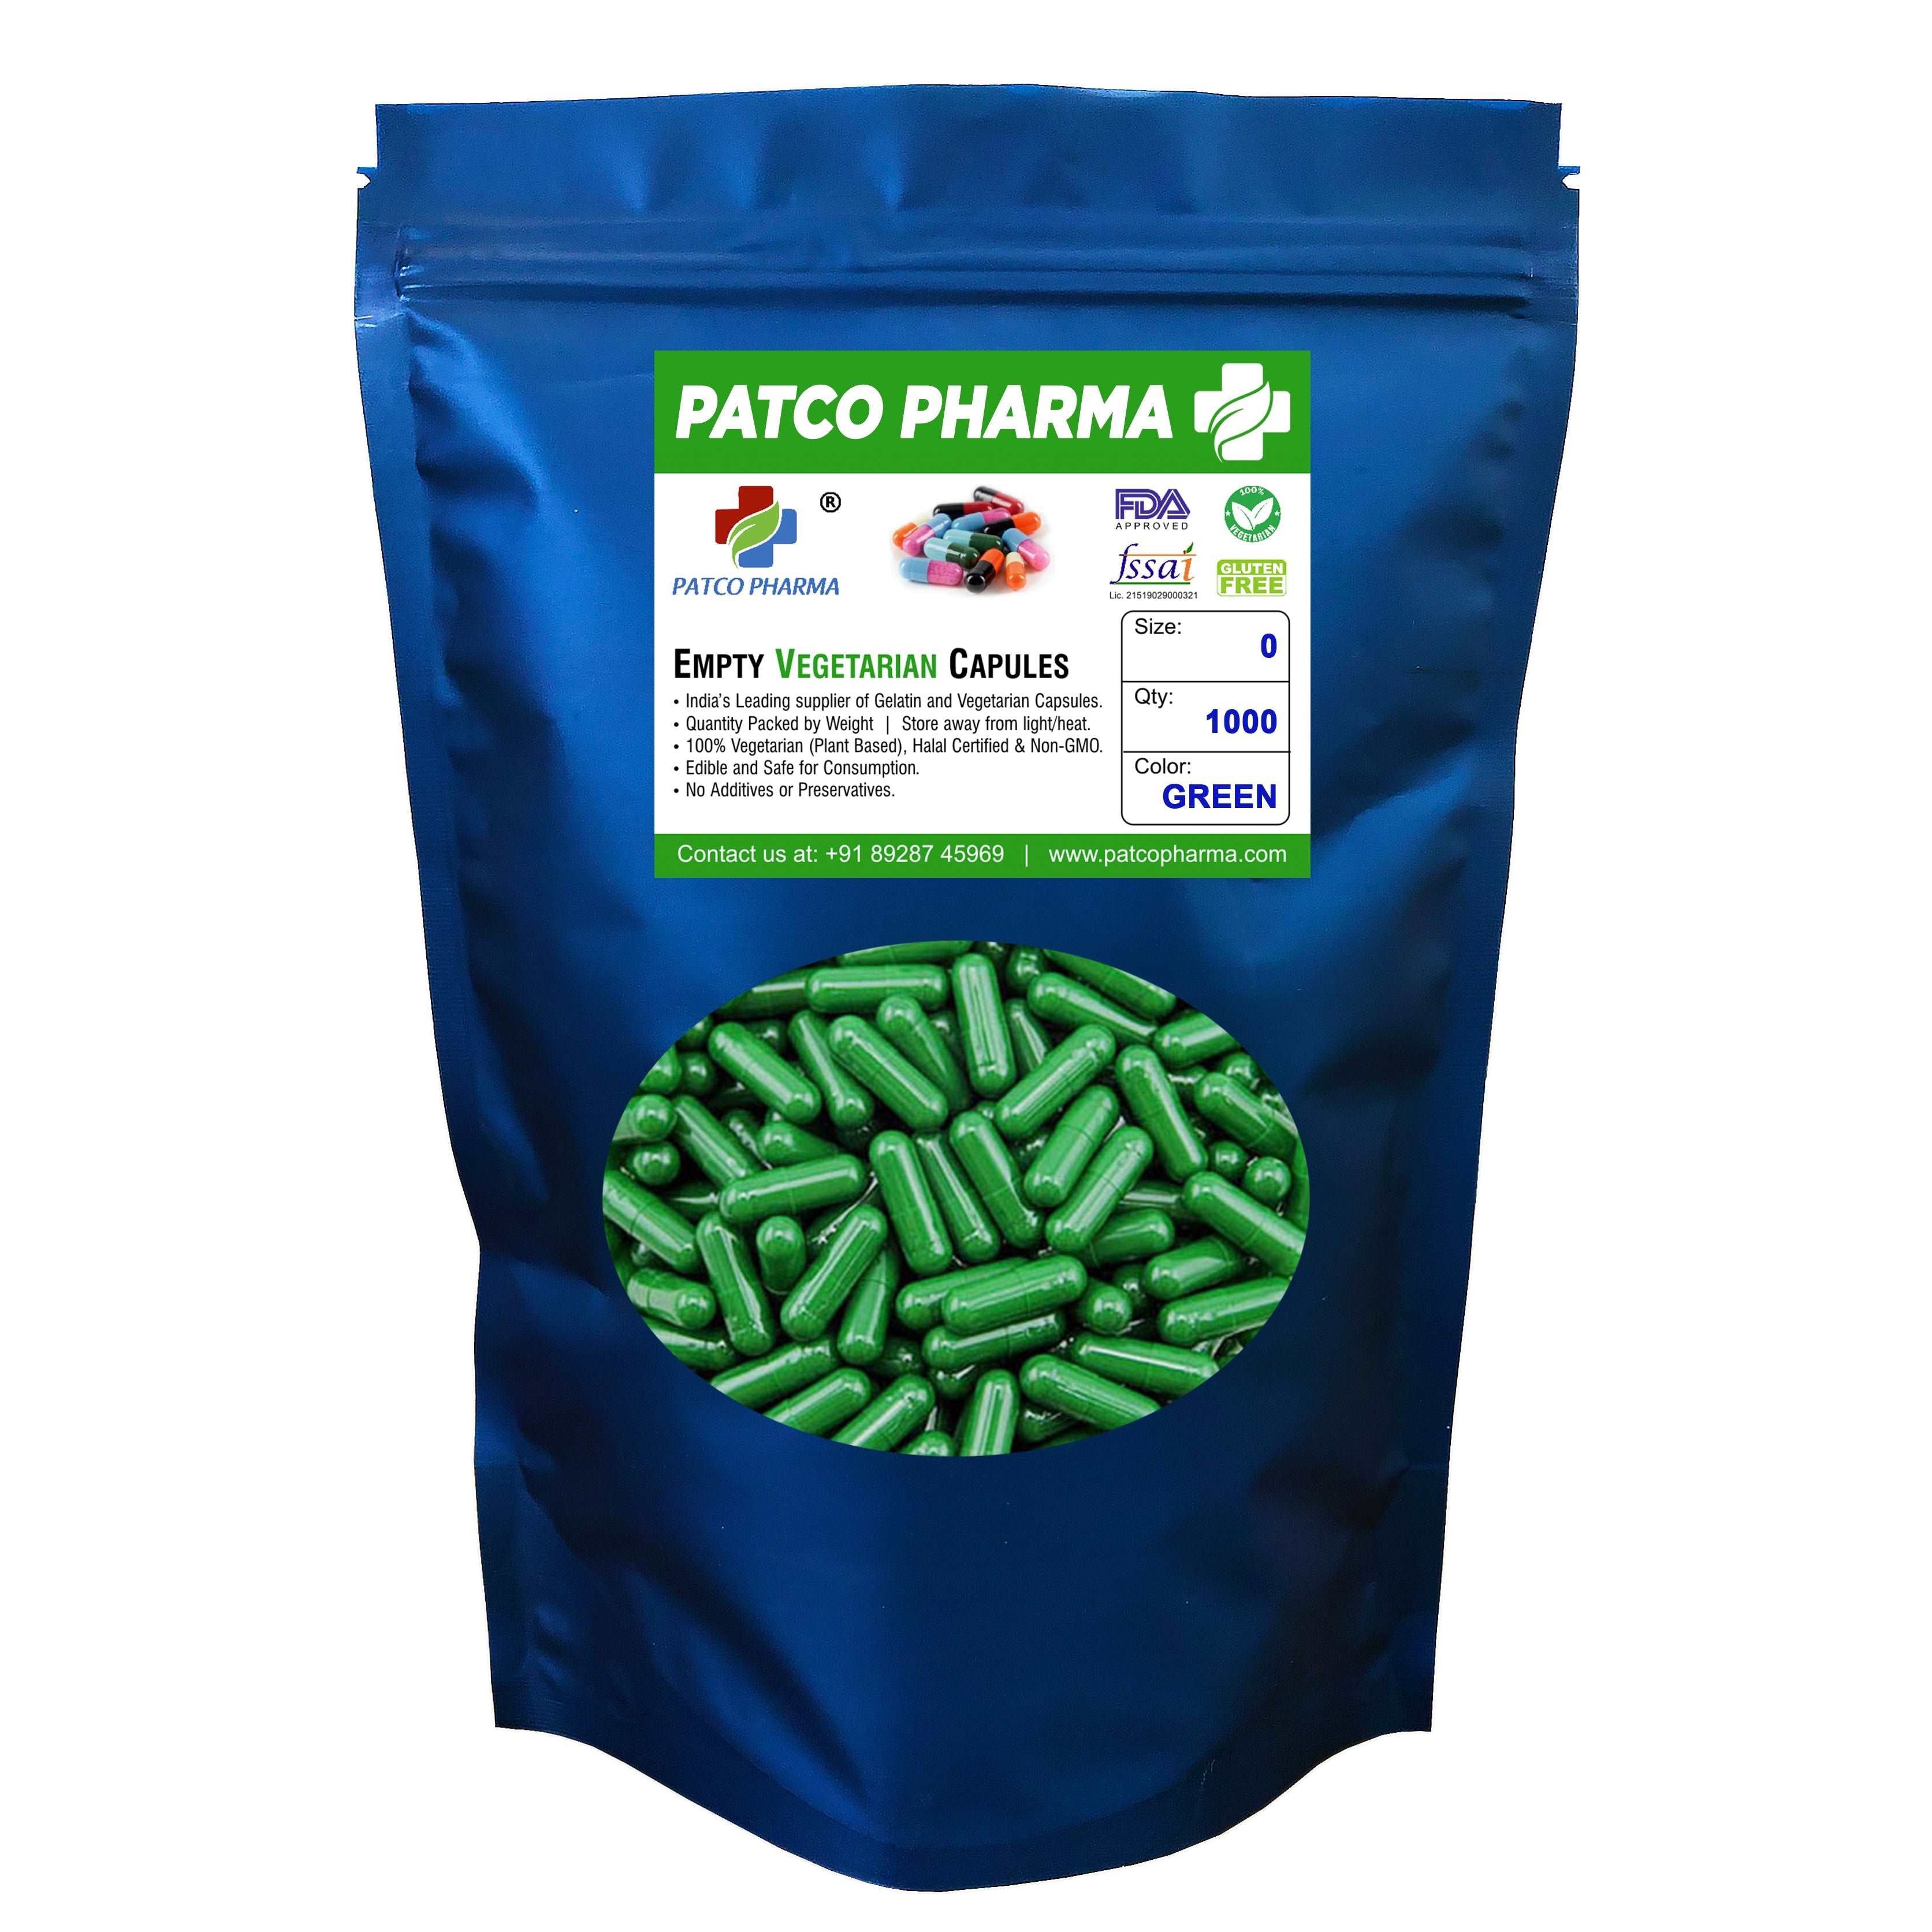 Empty Vegetarian Capsule - Size 0, Patco Pharma, HPMC capsules, empty-vegetarian-capsule-size-0, 500 mg capsule, Size 0 Capsue, Vegetarian capsule, Patco Pharma